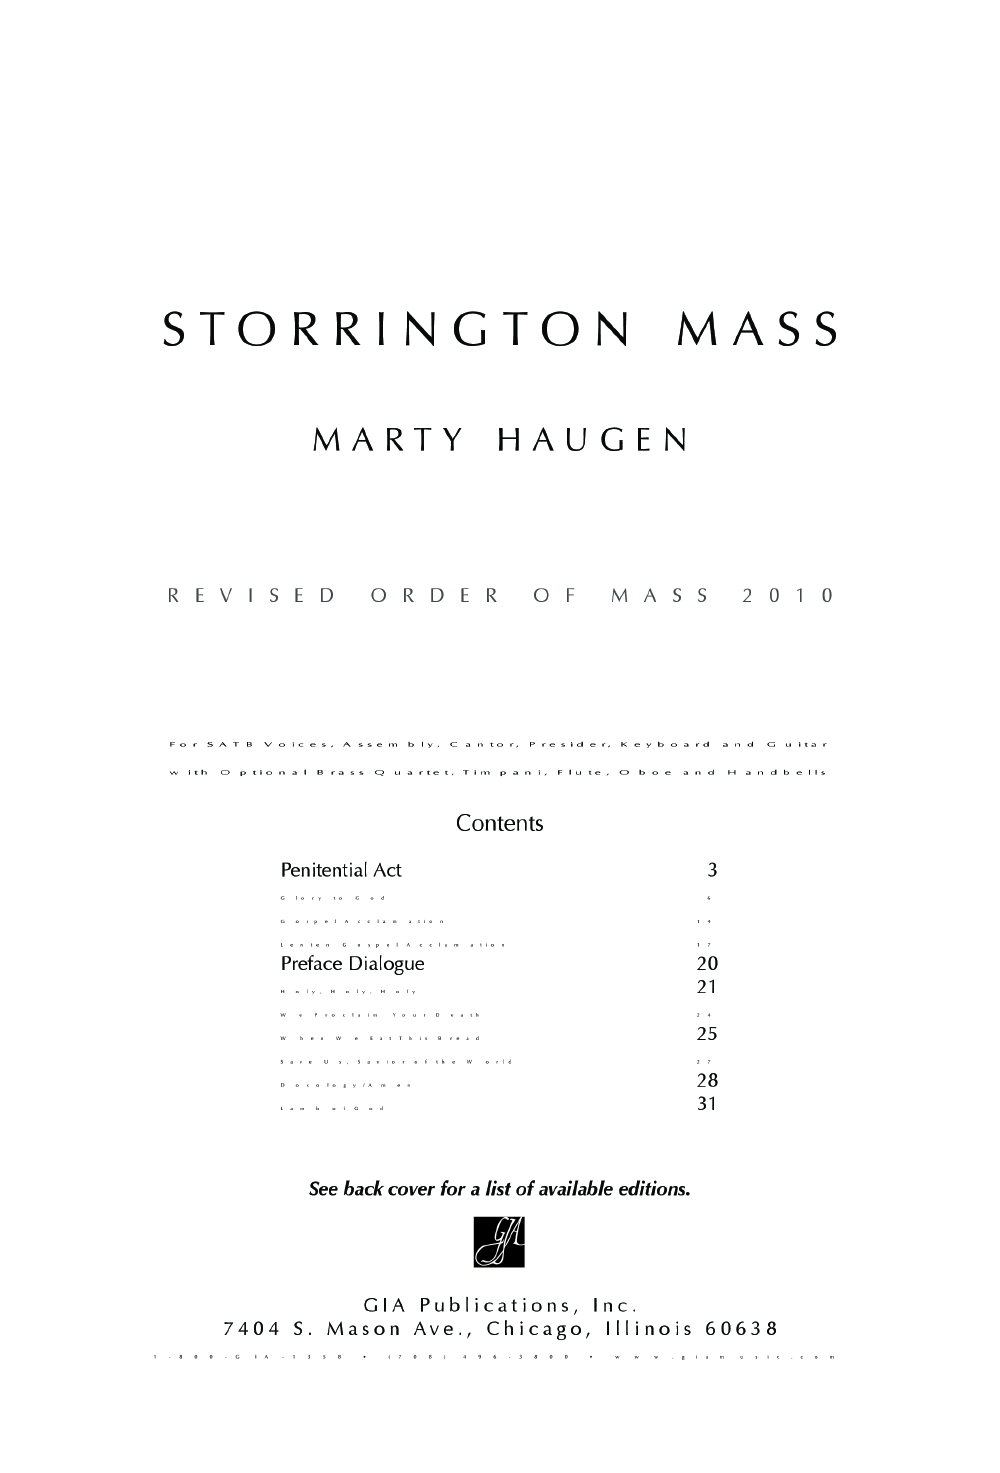 STORRINGTON MASS